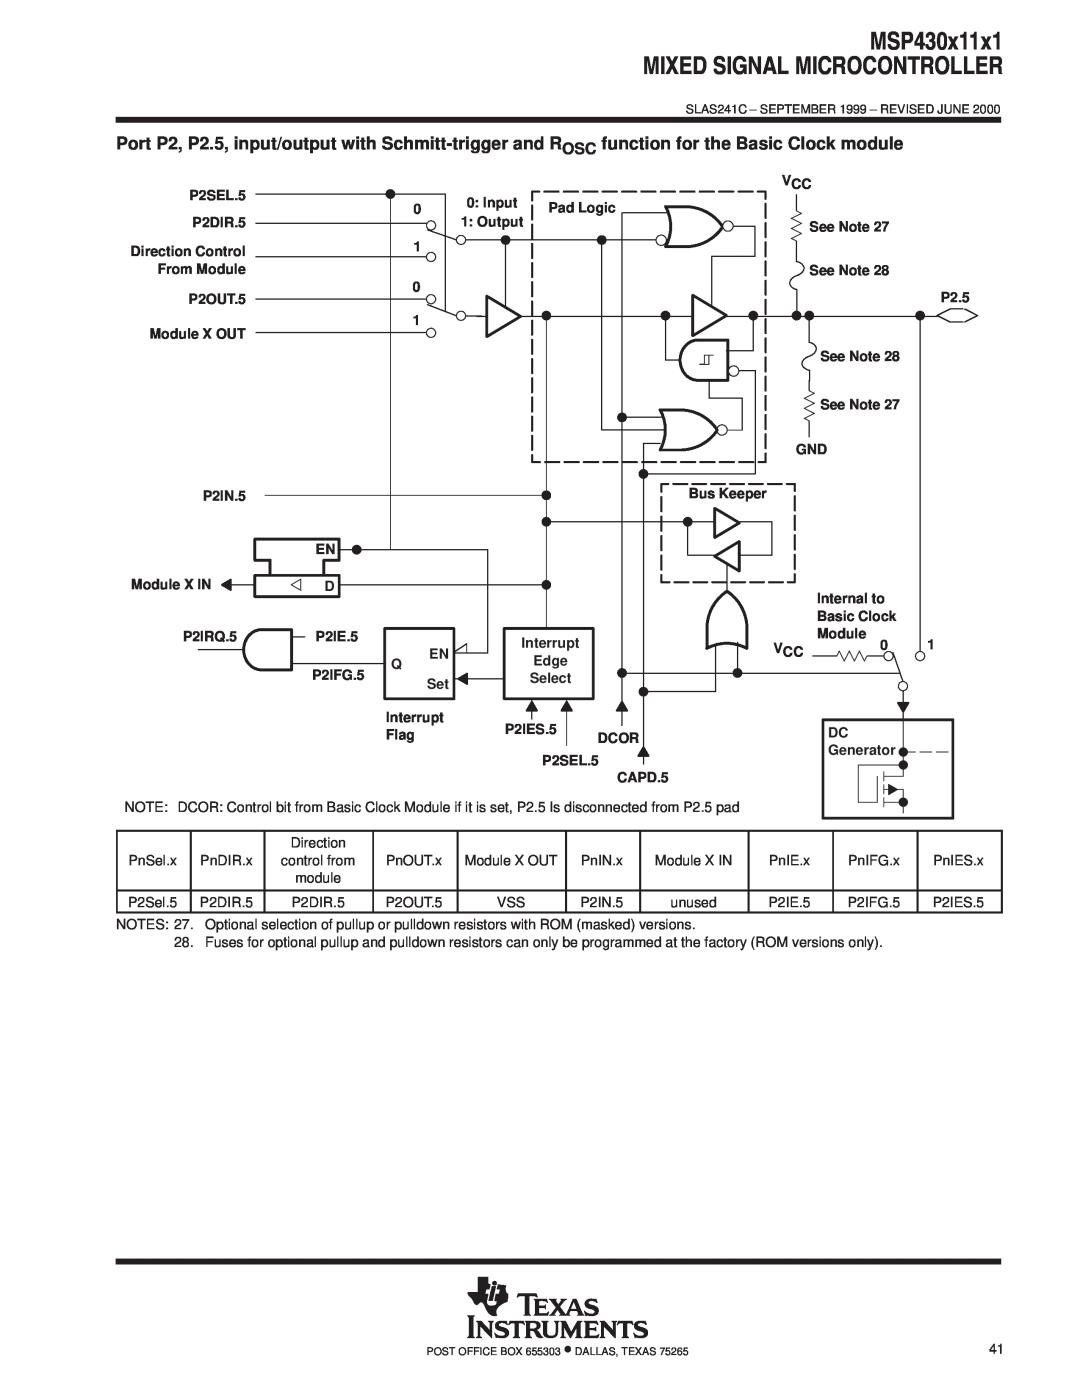 Texas Instruments warranty MSP430x11x1 MIXED SIGNAL MICROCONTROLLER 